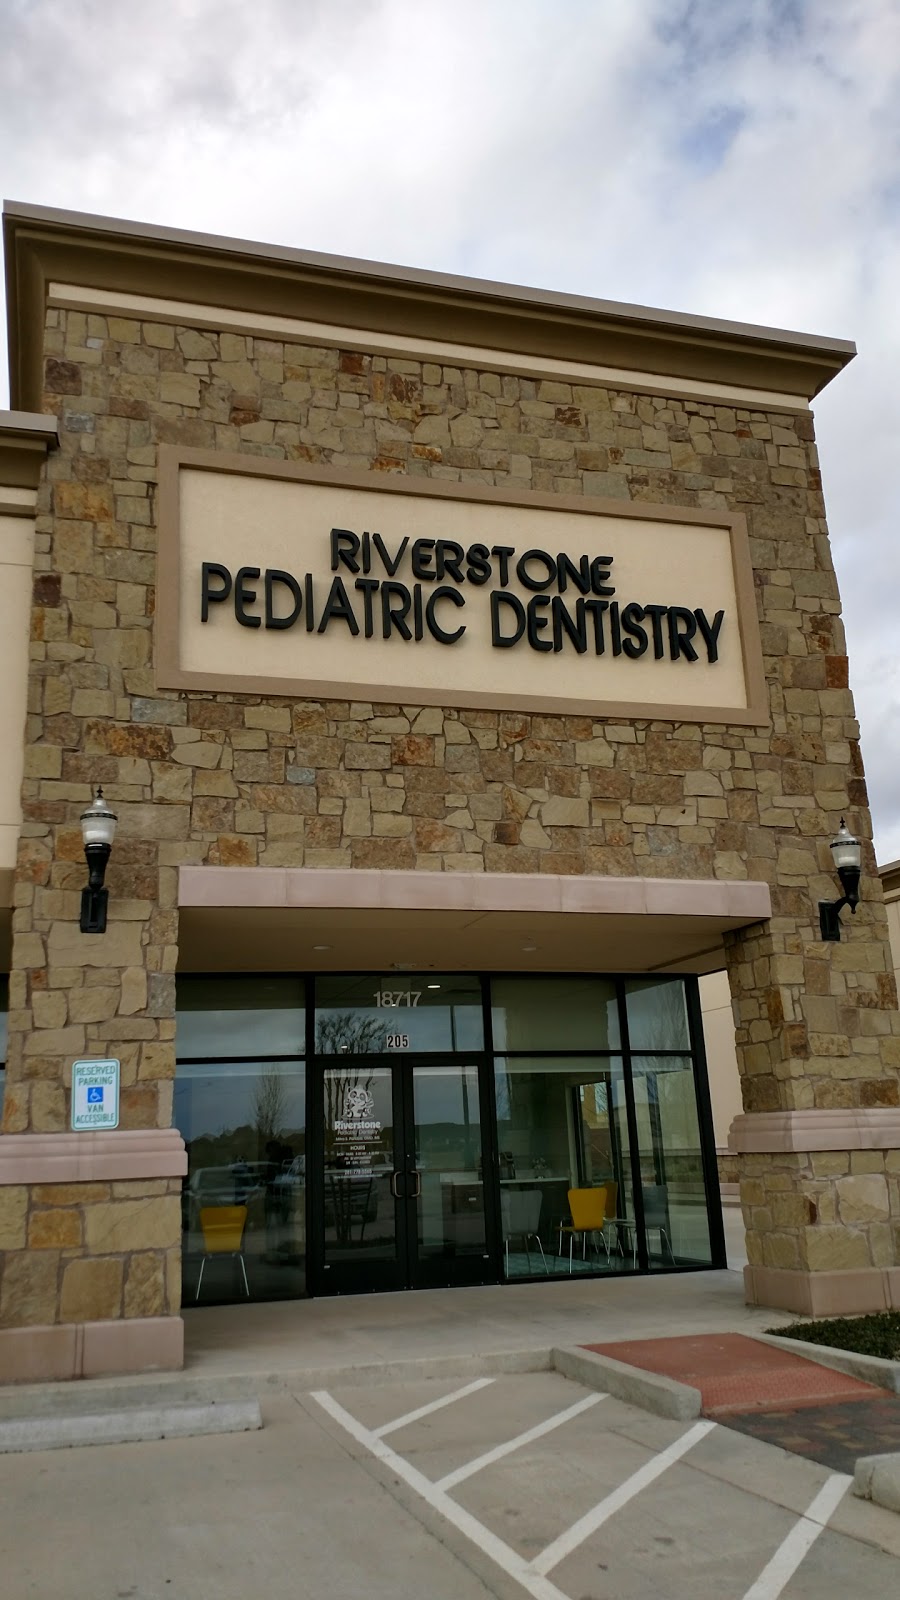 Riverstone Pediatric Dentistry | 18717 University Blvd Ste 205, Sugar Land, TX 77479 | Phone: (281) 778-5565